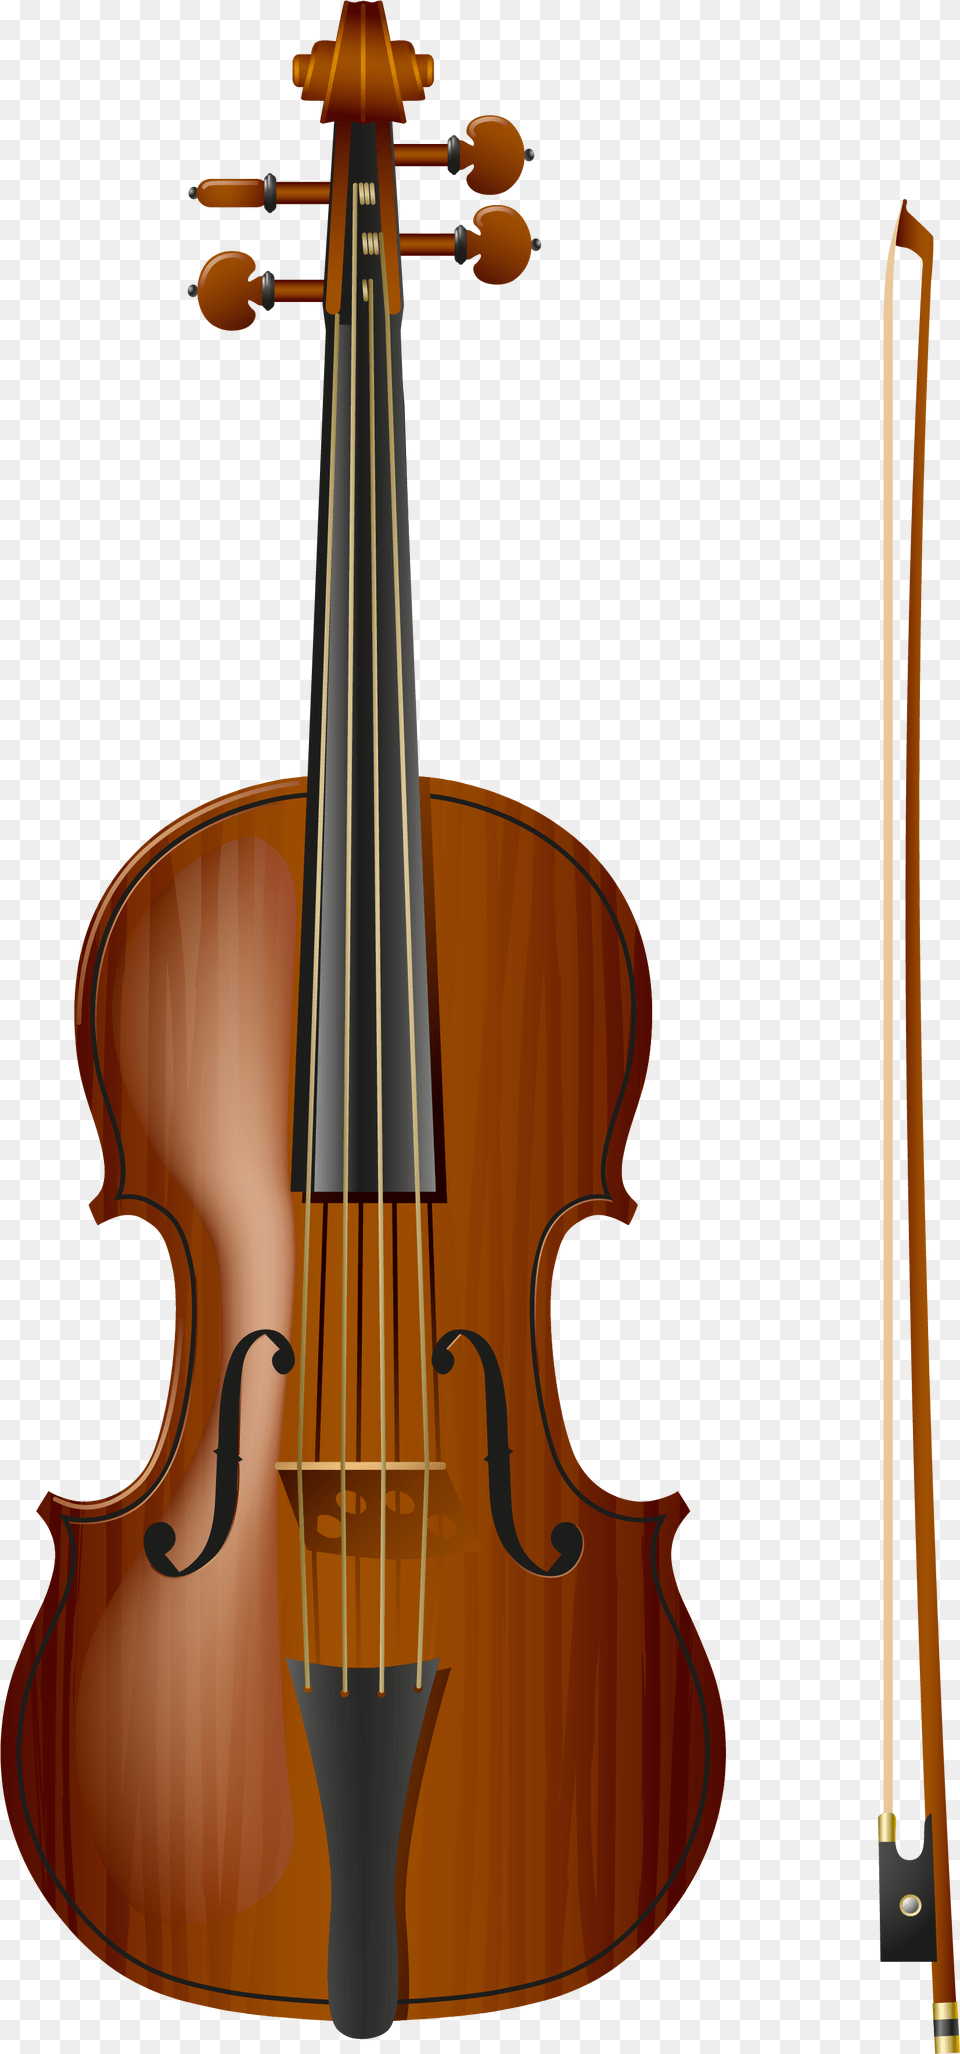 Clipart Picture Transparent Transparent Background Violin, Musical Instrument, Guitar, Cello Png